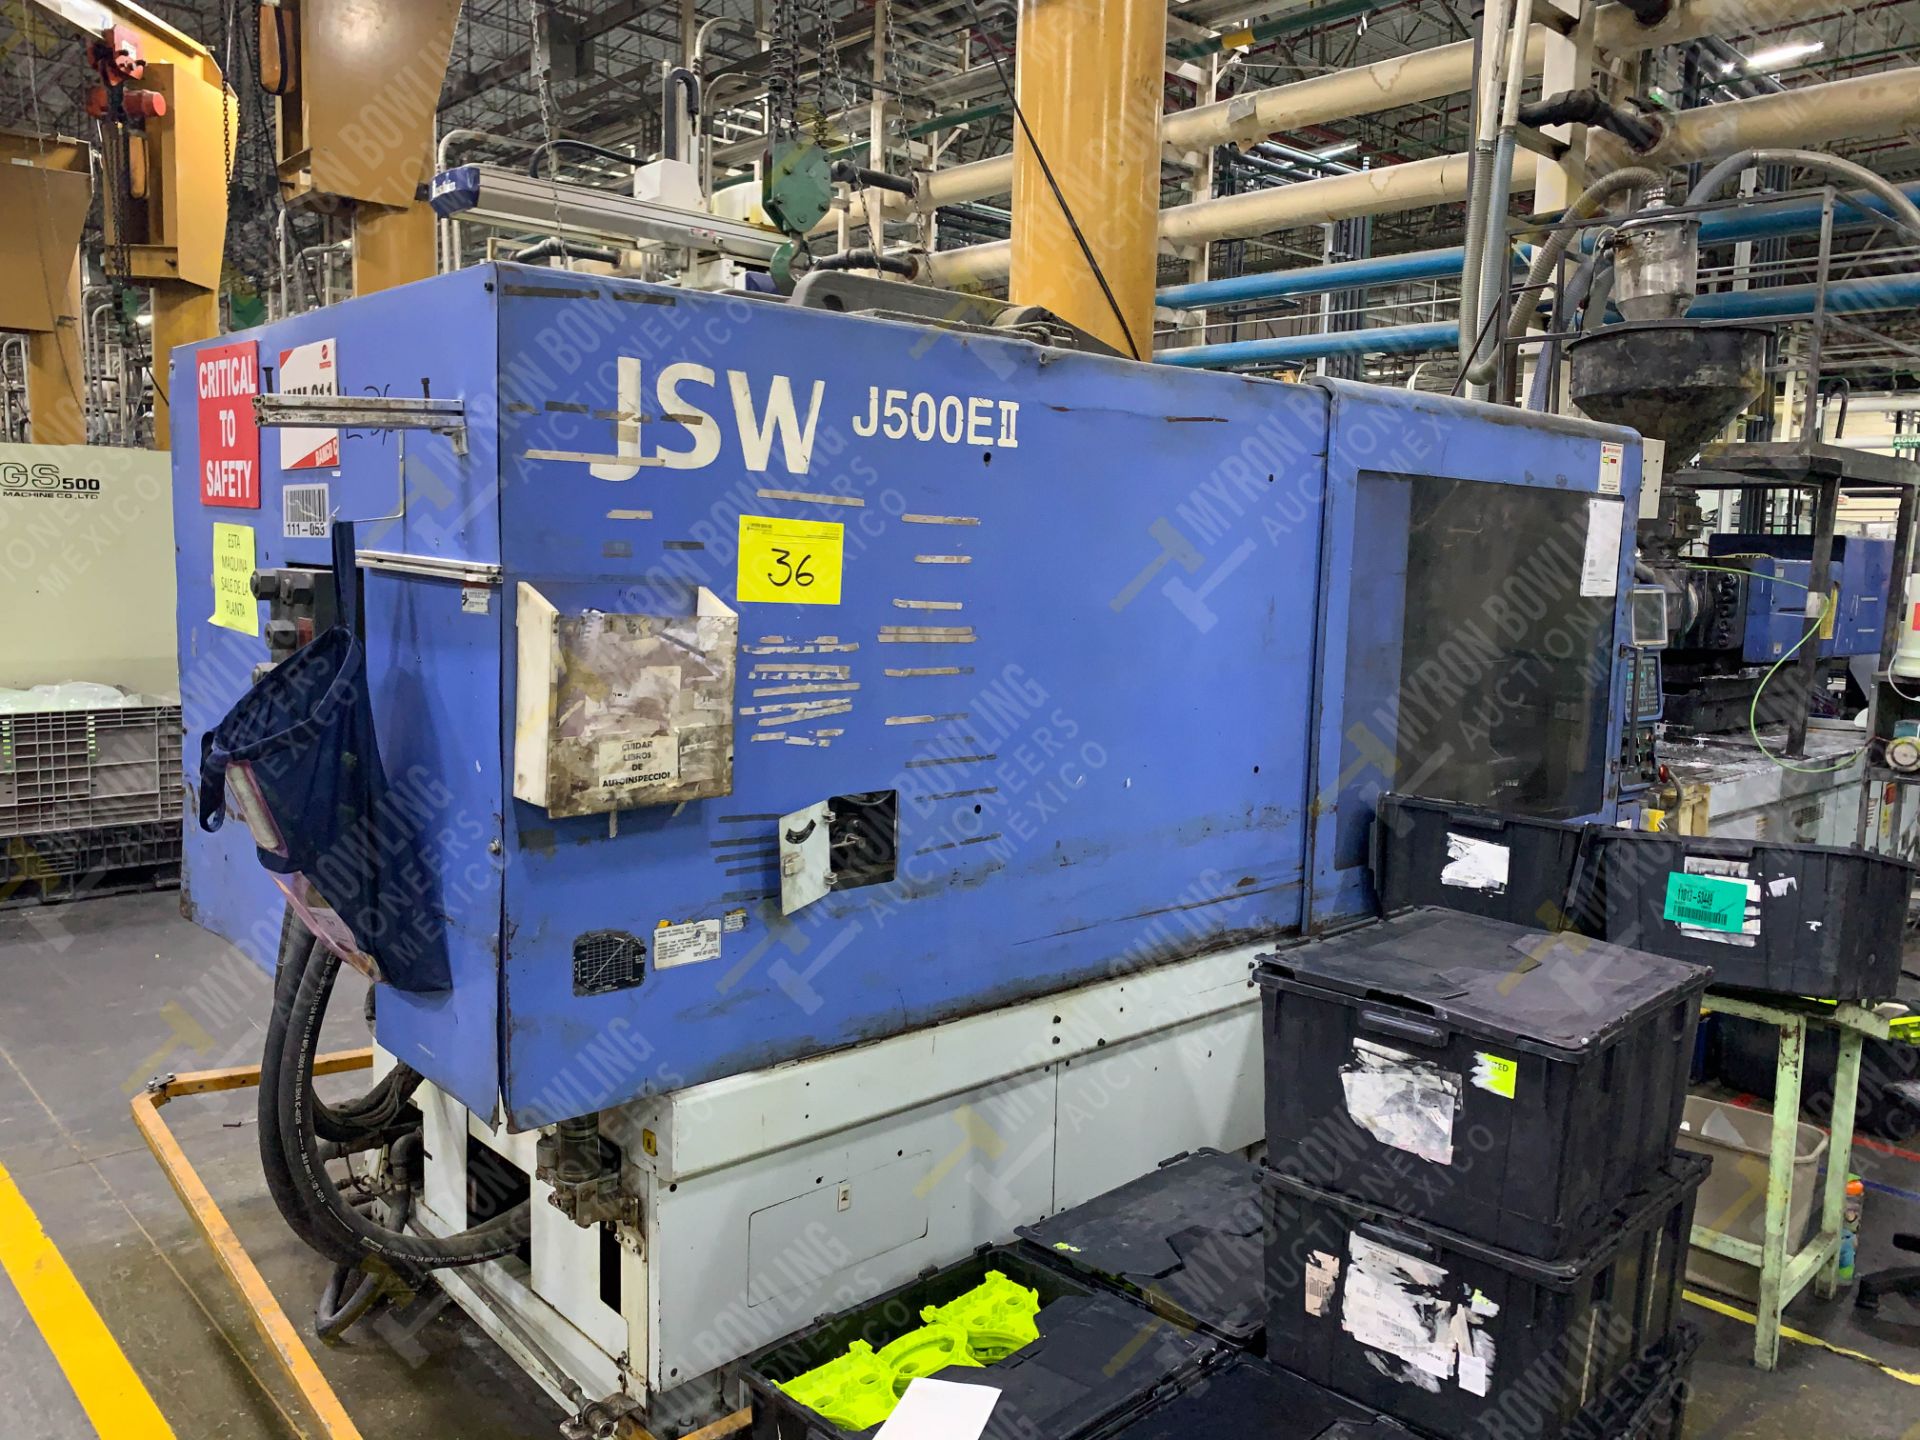 500 TON JSW J500ELL PLASTIC INJECTION MOLDING MACHINE, MFG YEAR 1998